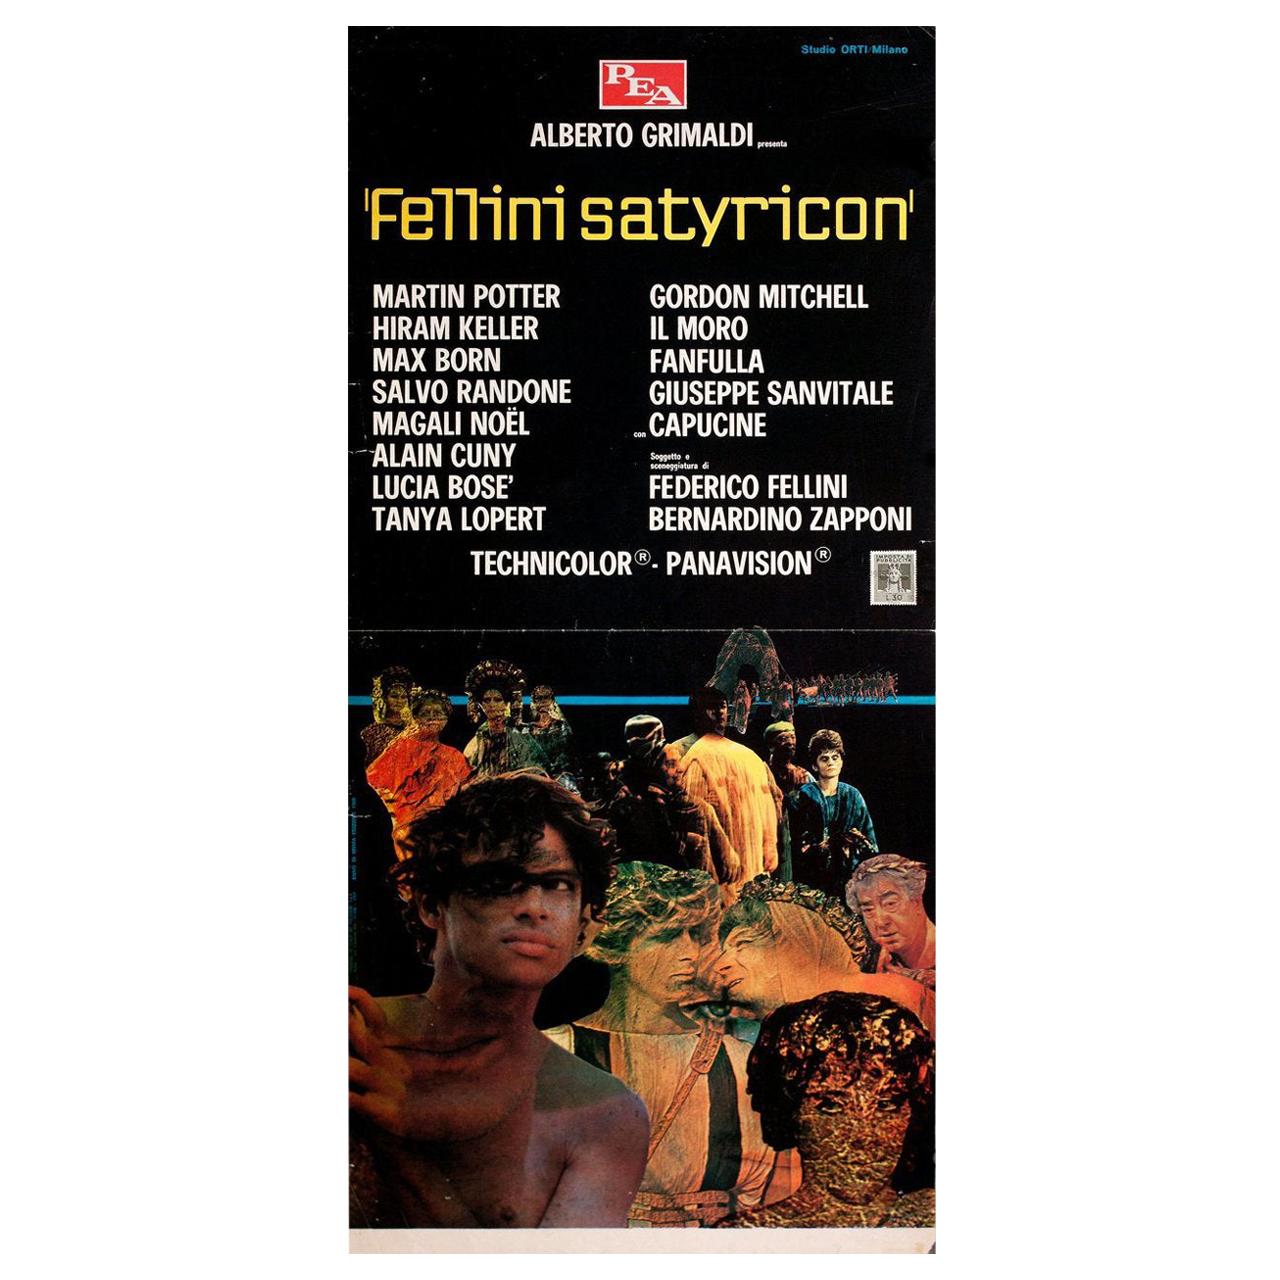 “Fellini Satyricon” 1970 Italian Locandina Film Poster